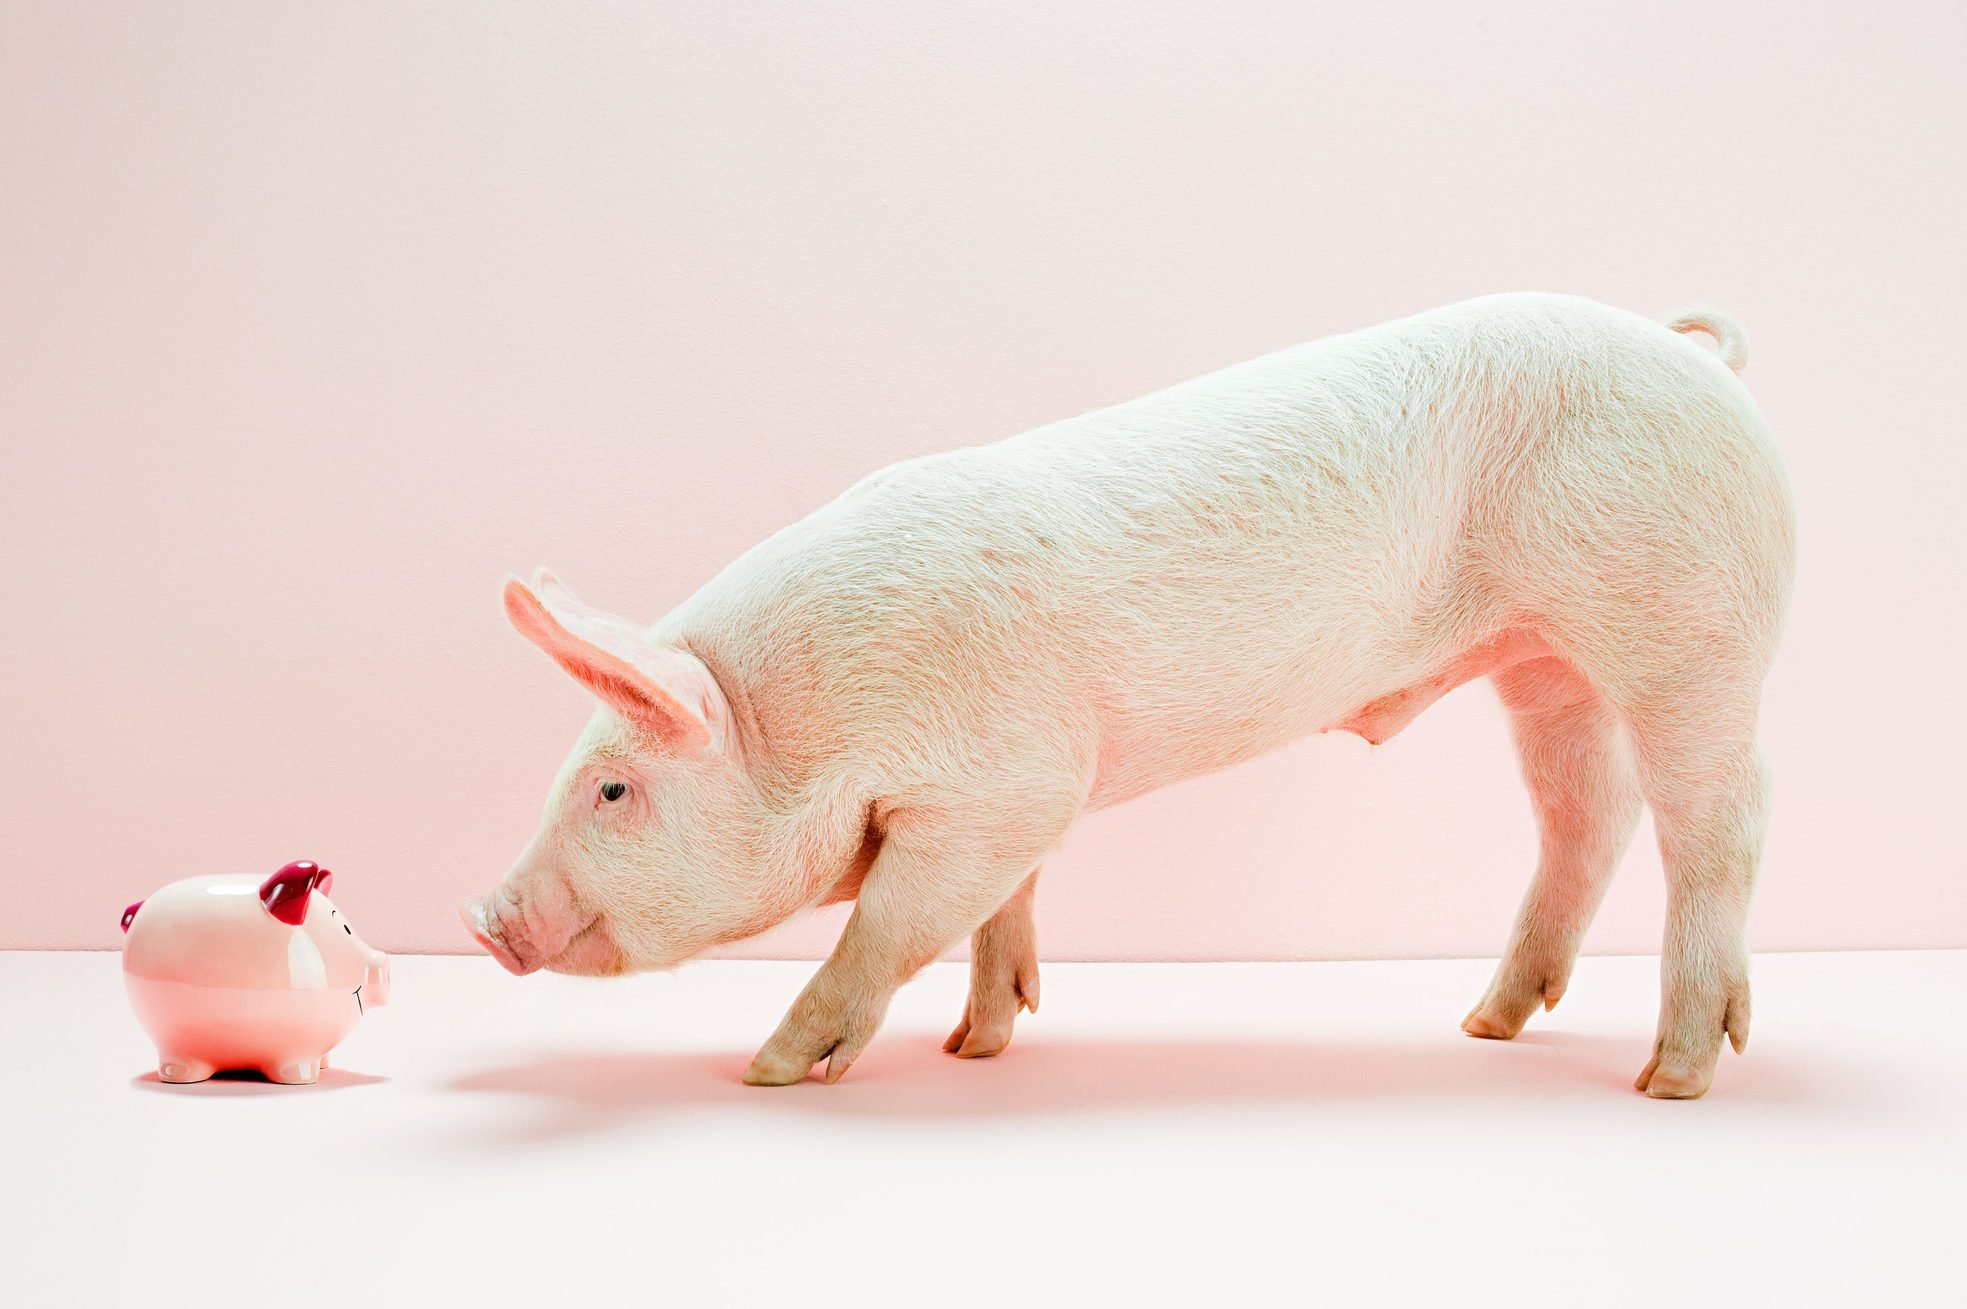 40 Adorable Pig Pictures to Make You Smile | Reader's Digest